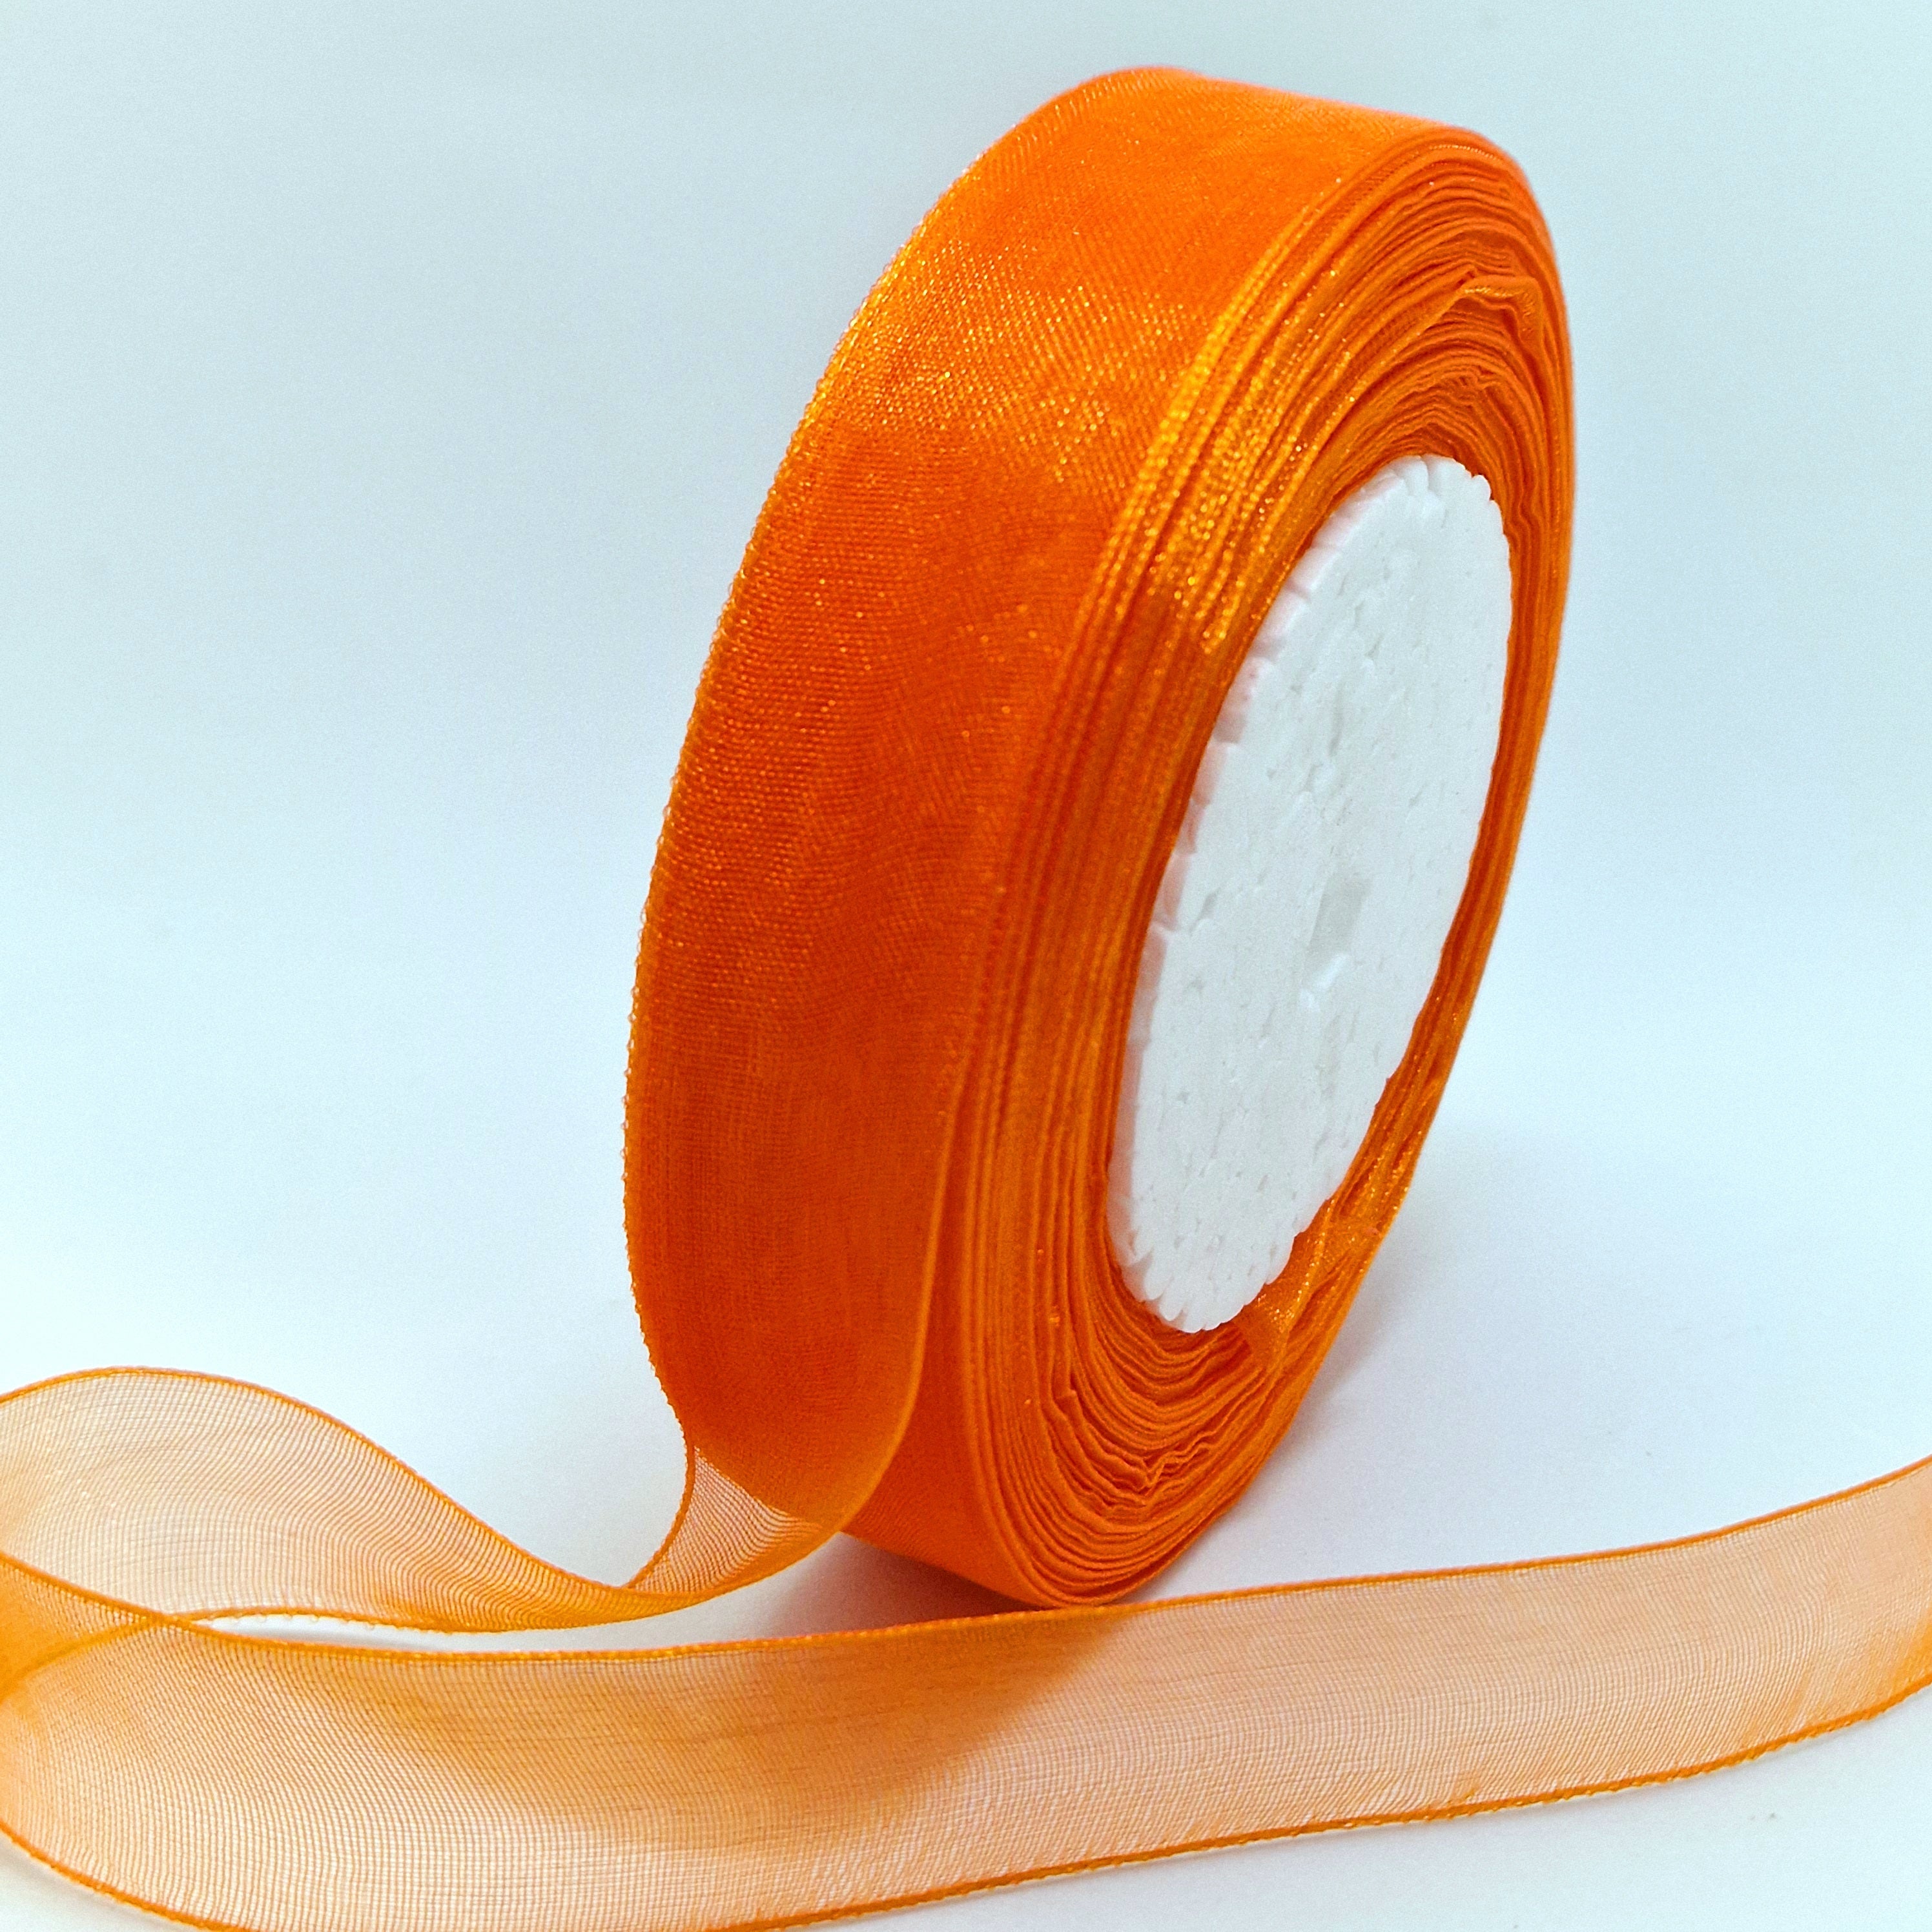 MajorCrafts 20mm 45metres Deep Orange Sheer Organza Fabric Ribbon Roll R1025